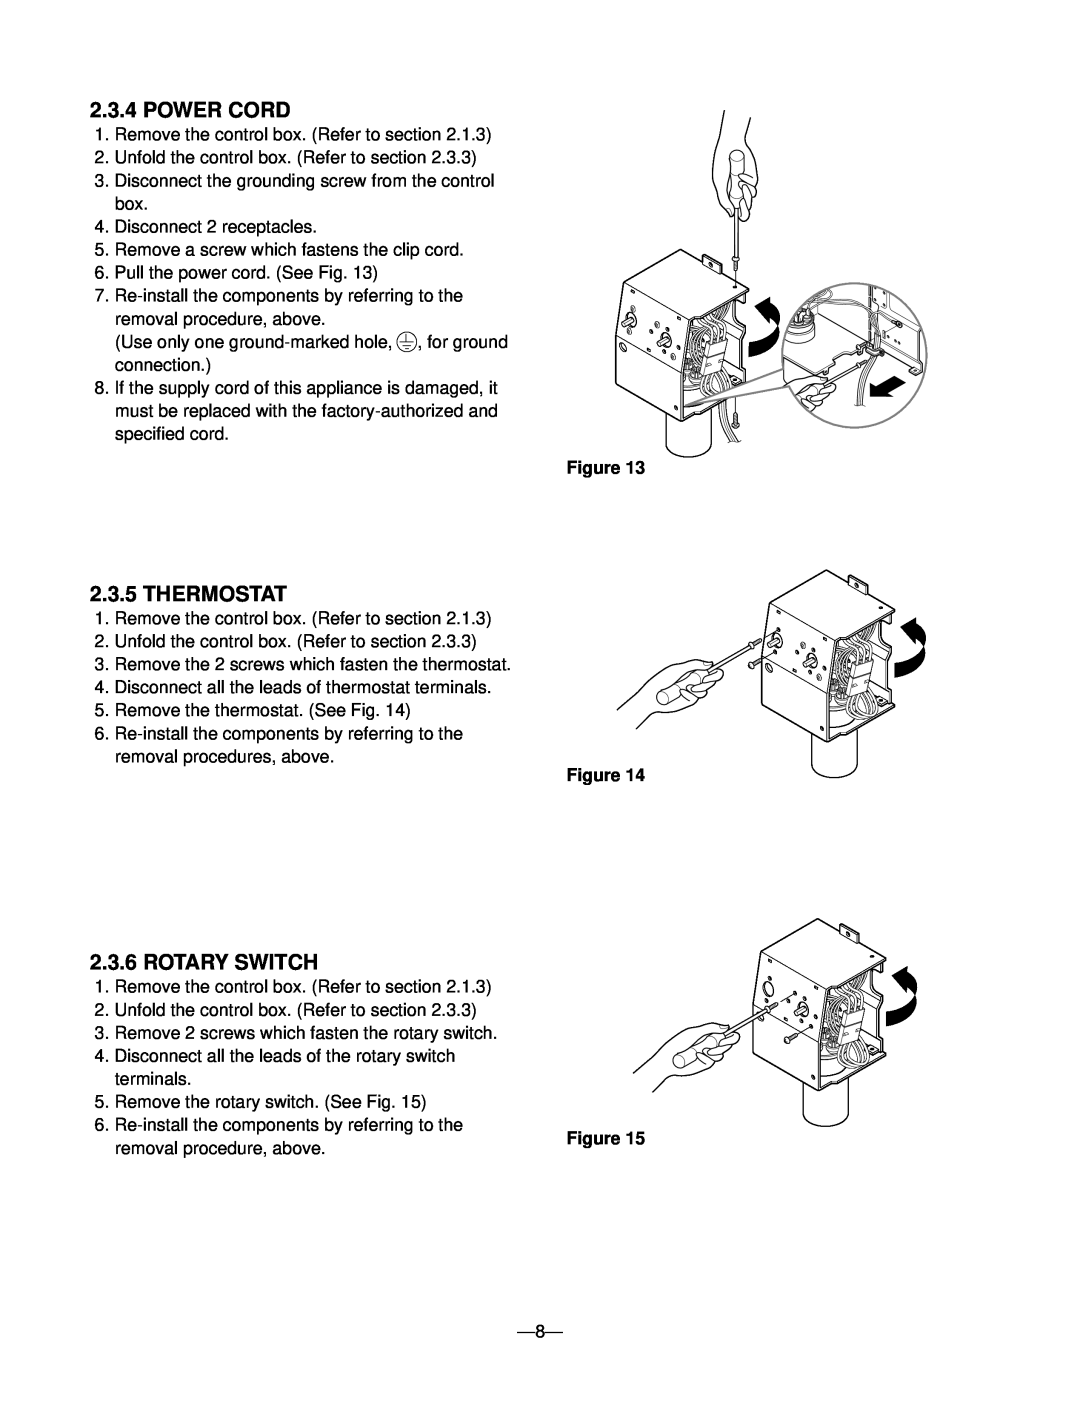 Friedrich UE08, UE12, UE10 manual Power Cord, Thermostat, Rotary Switch, Figure 